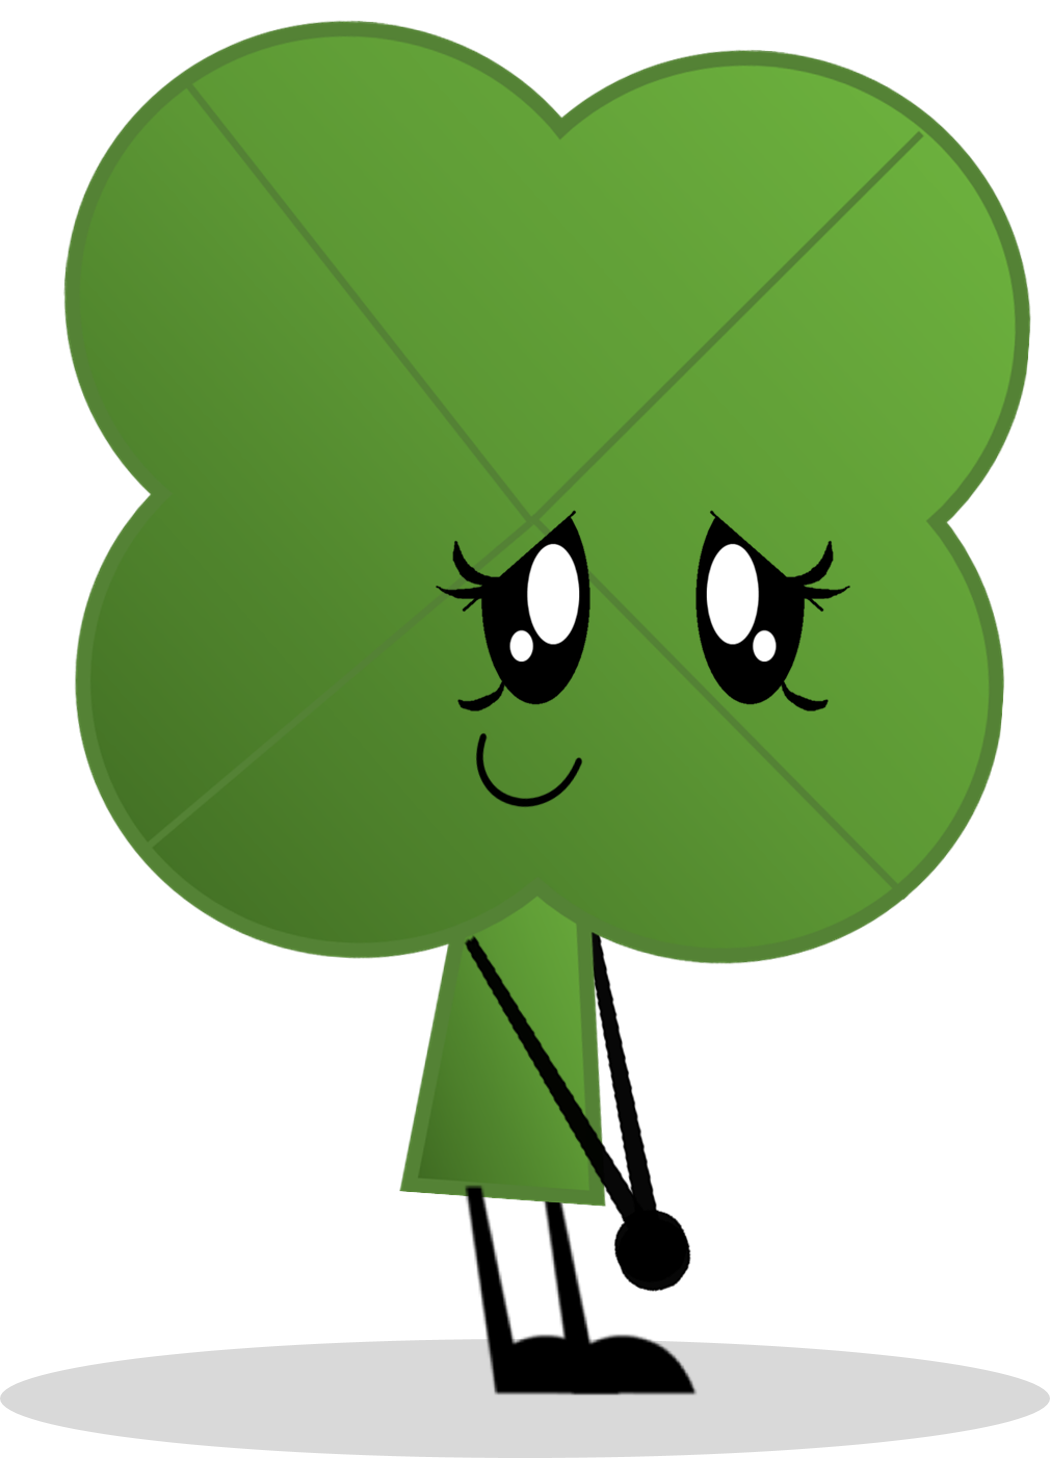 clover clipart green object